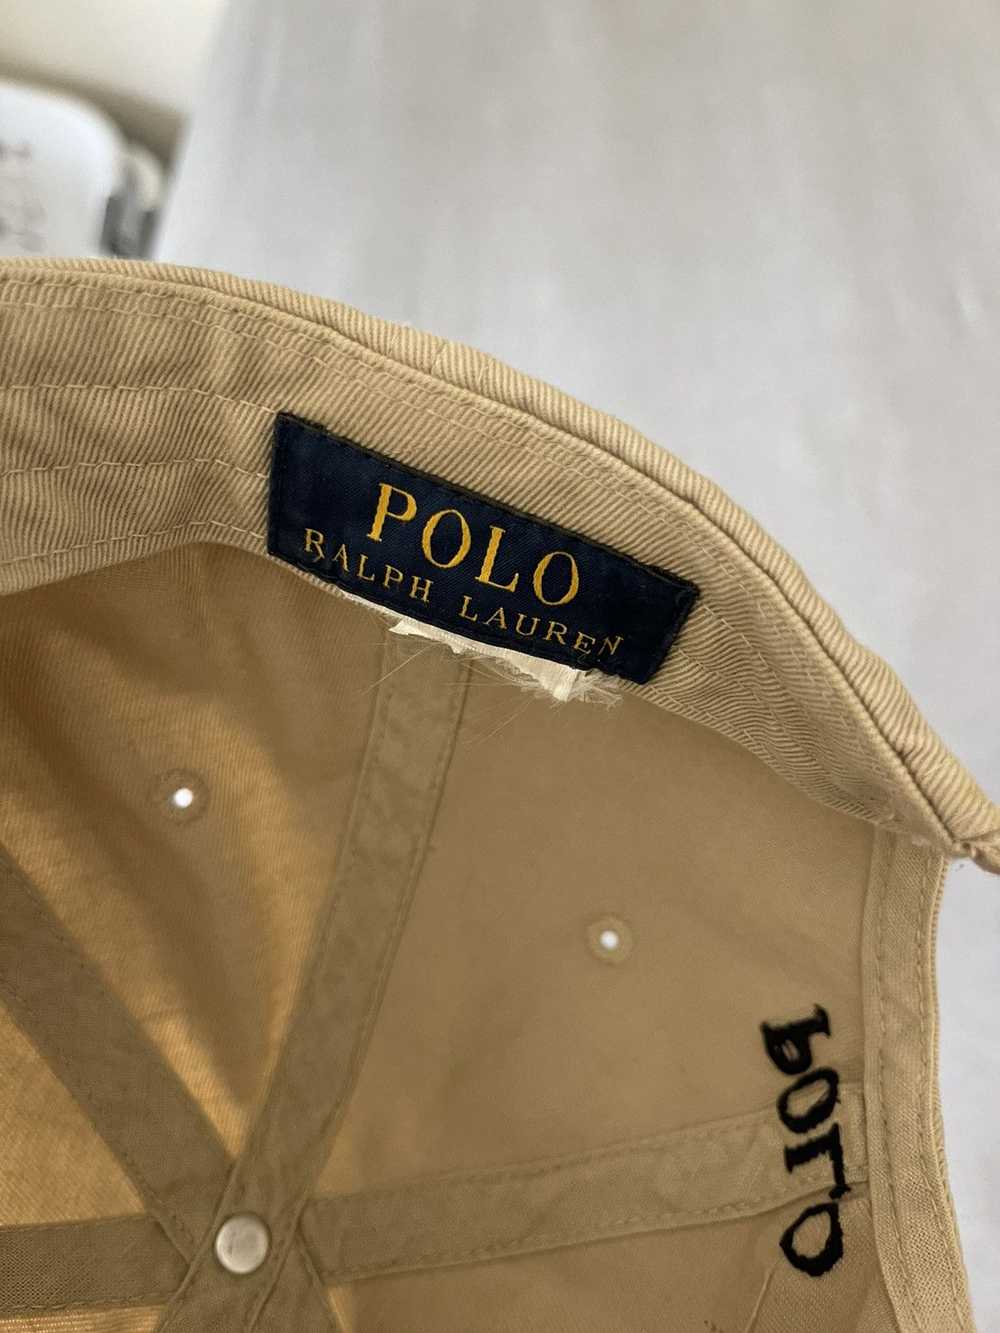 Polo Ralph Lauren Polo hat - image 4